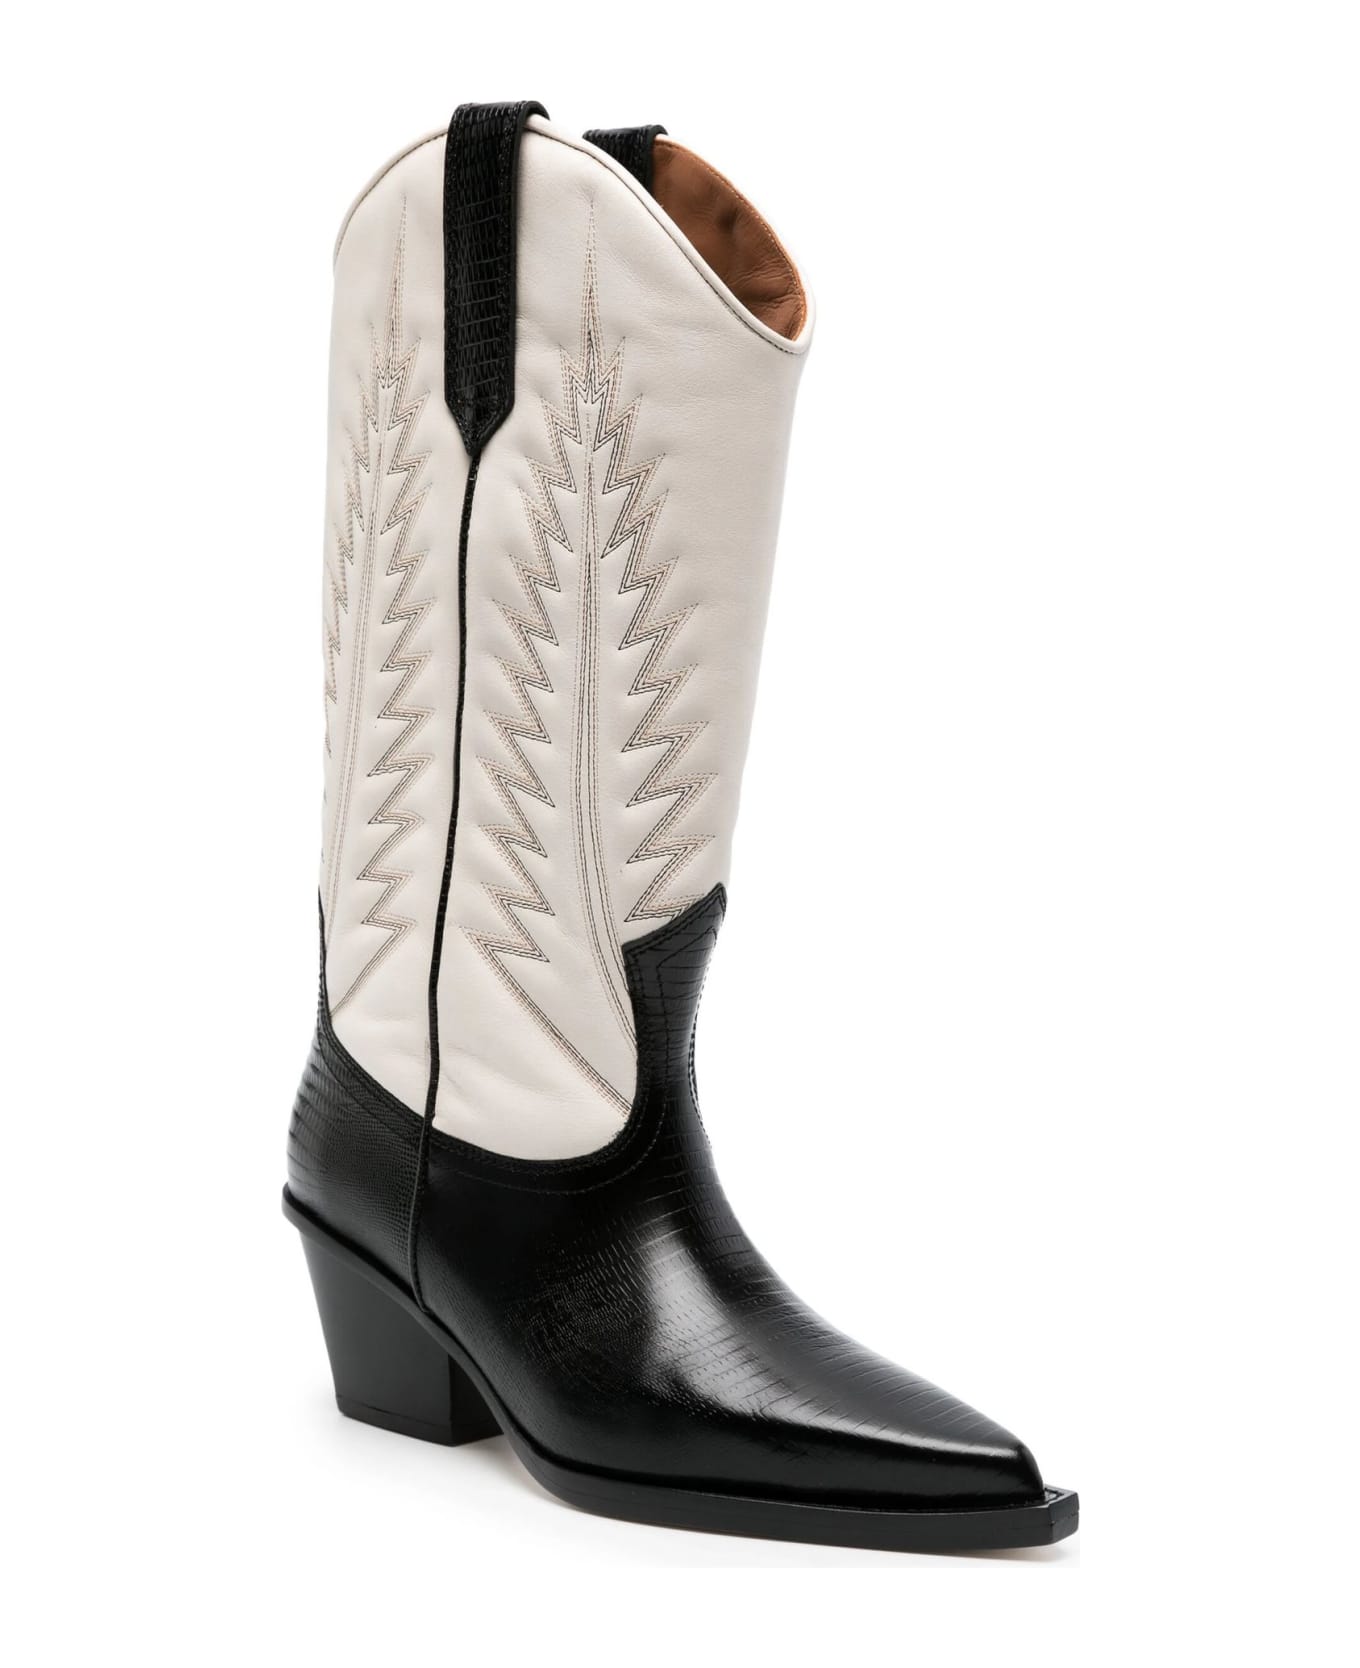 Paris Texas Bone White And Black Calf Leather Boots - White